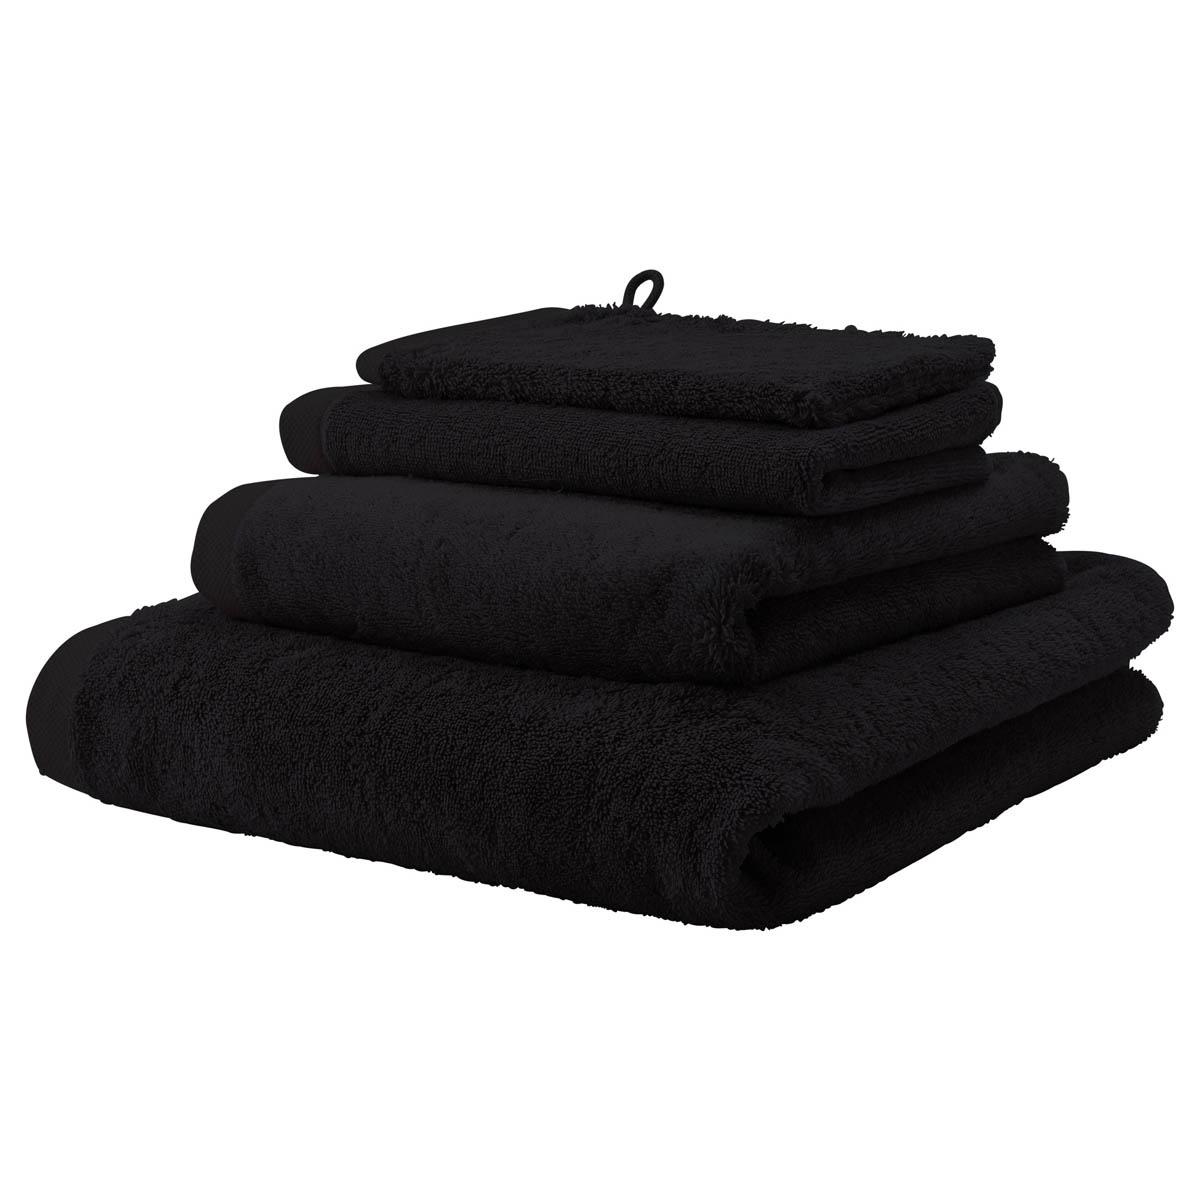 Aquanova - London handdoek zwart (09)